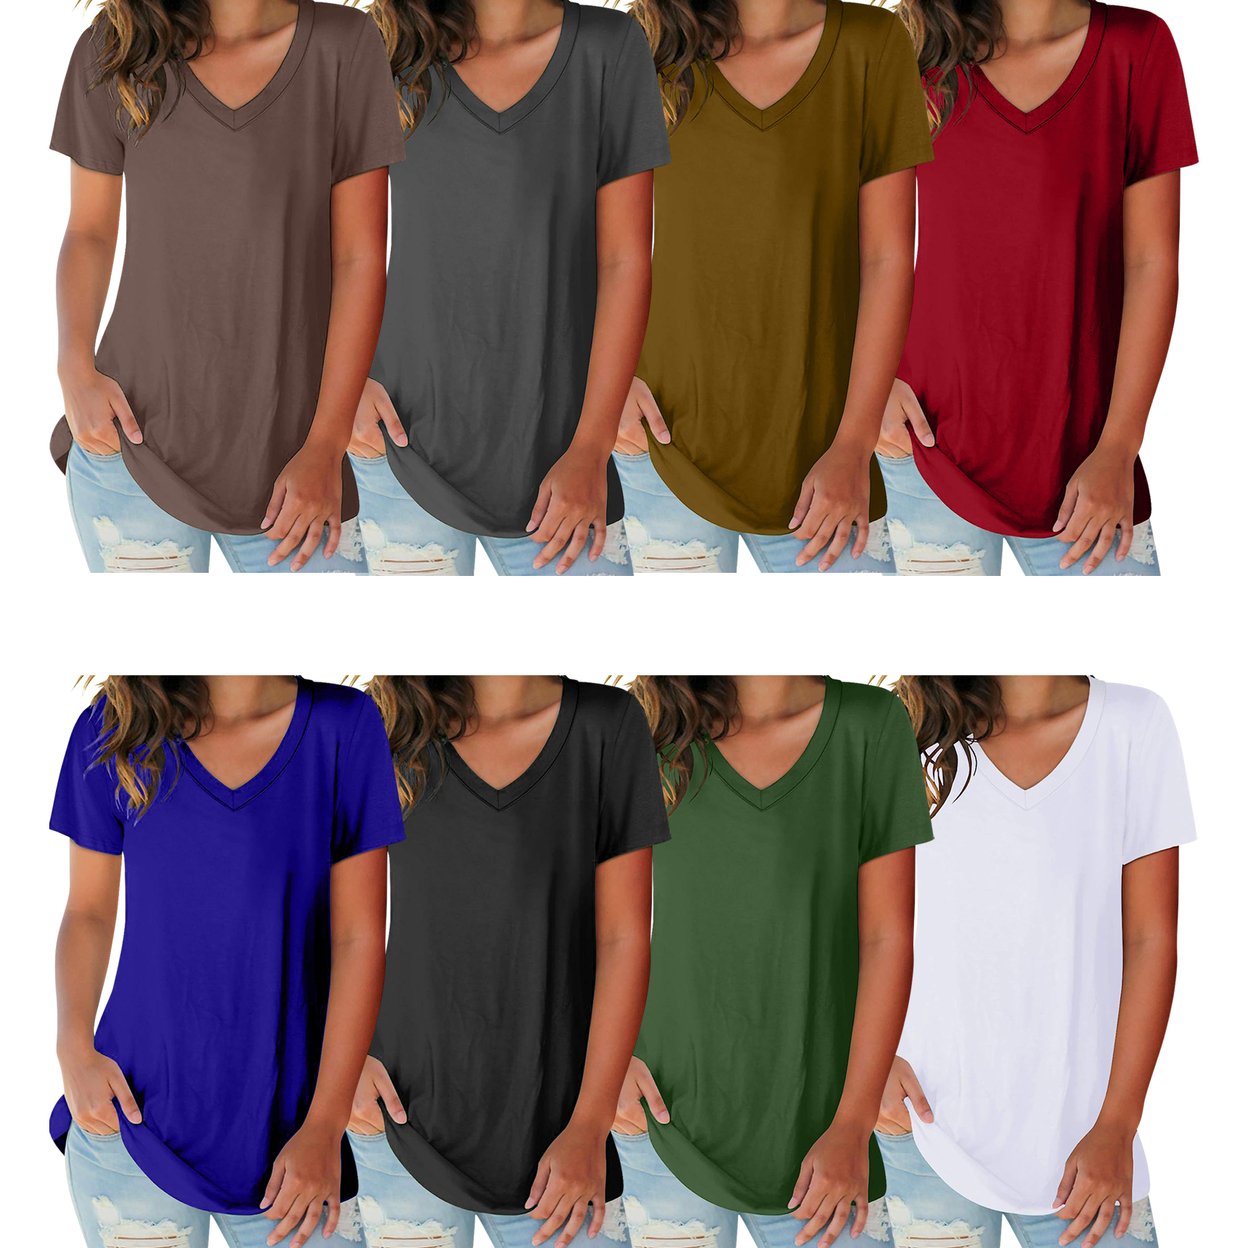 3-Pack: Women's Ultra Soft Smooth Cotton Blend Basic V-Neck Short Sleeve Shirts - Black, White Mustard, Xx-large